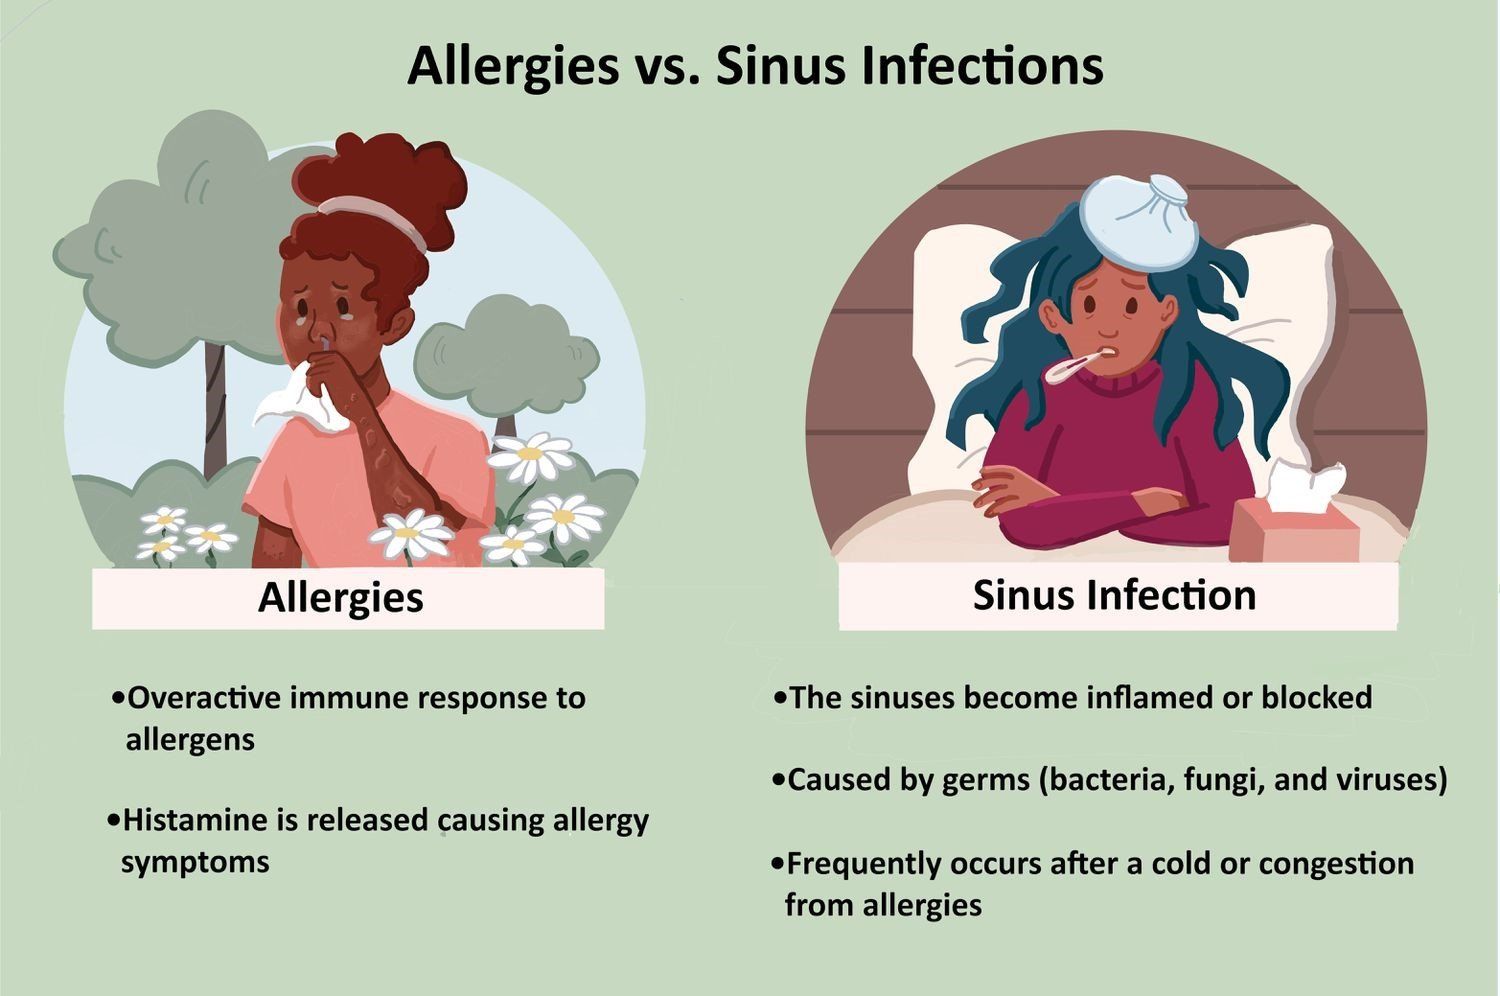 Allergies vs Sinus Infections